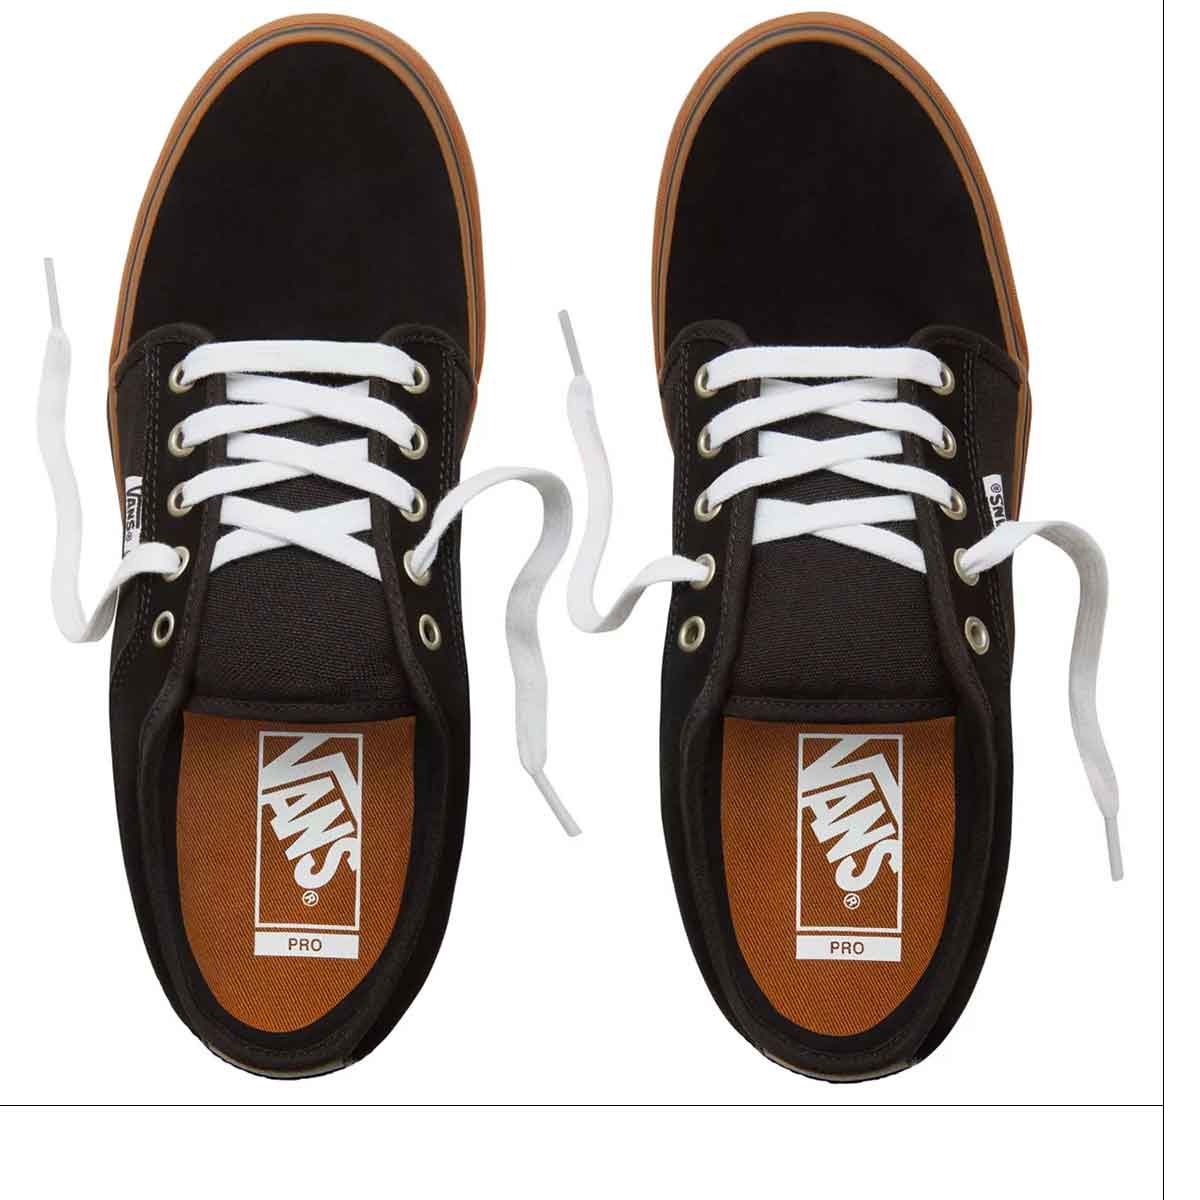 vans chukka low oxford black & gum skate shoes